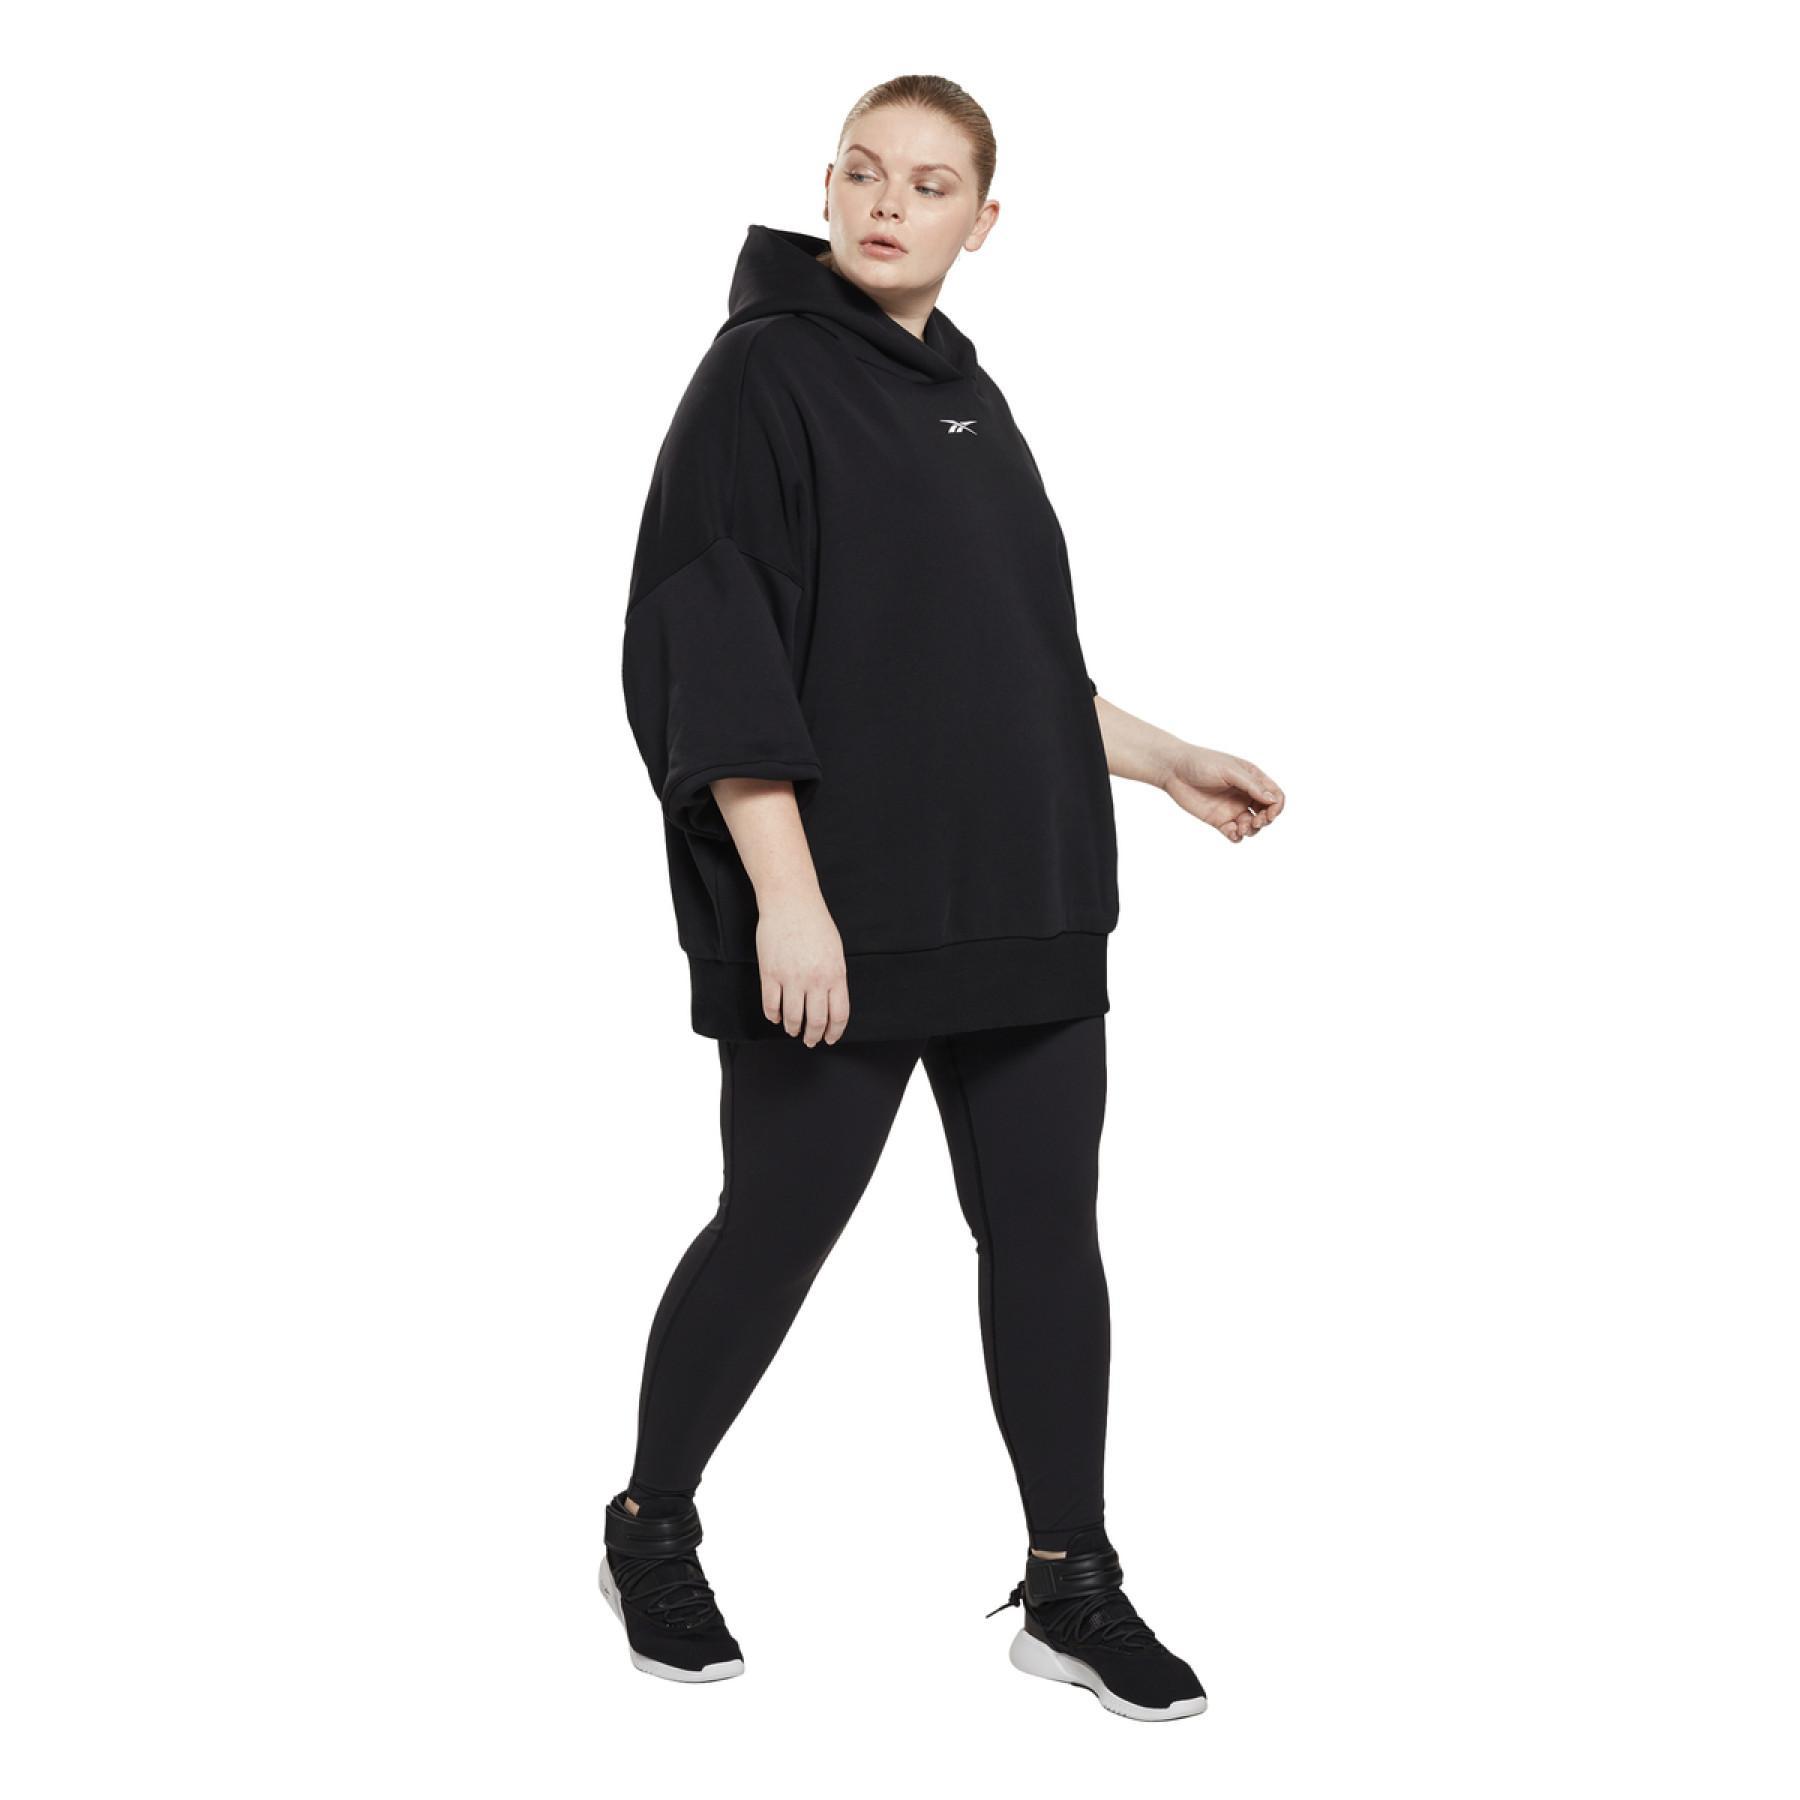 Camisola com capuz feminino Reebok Retro Oversize Grande Taille